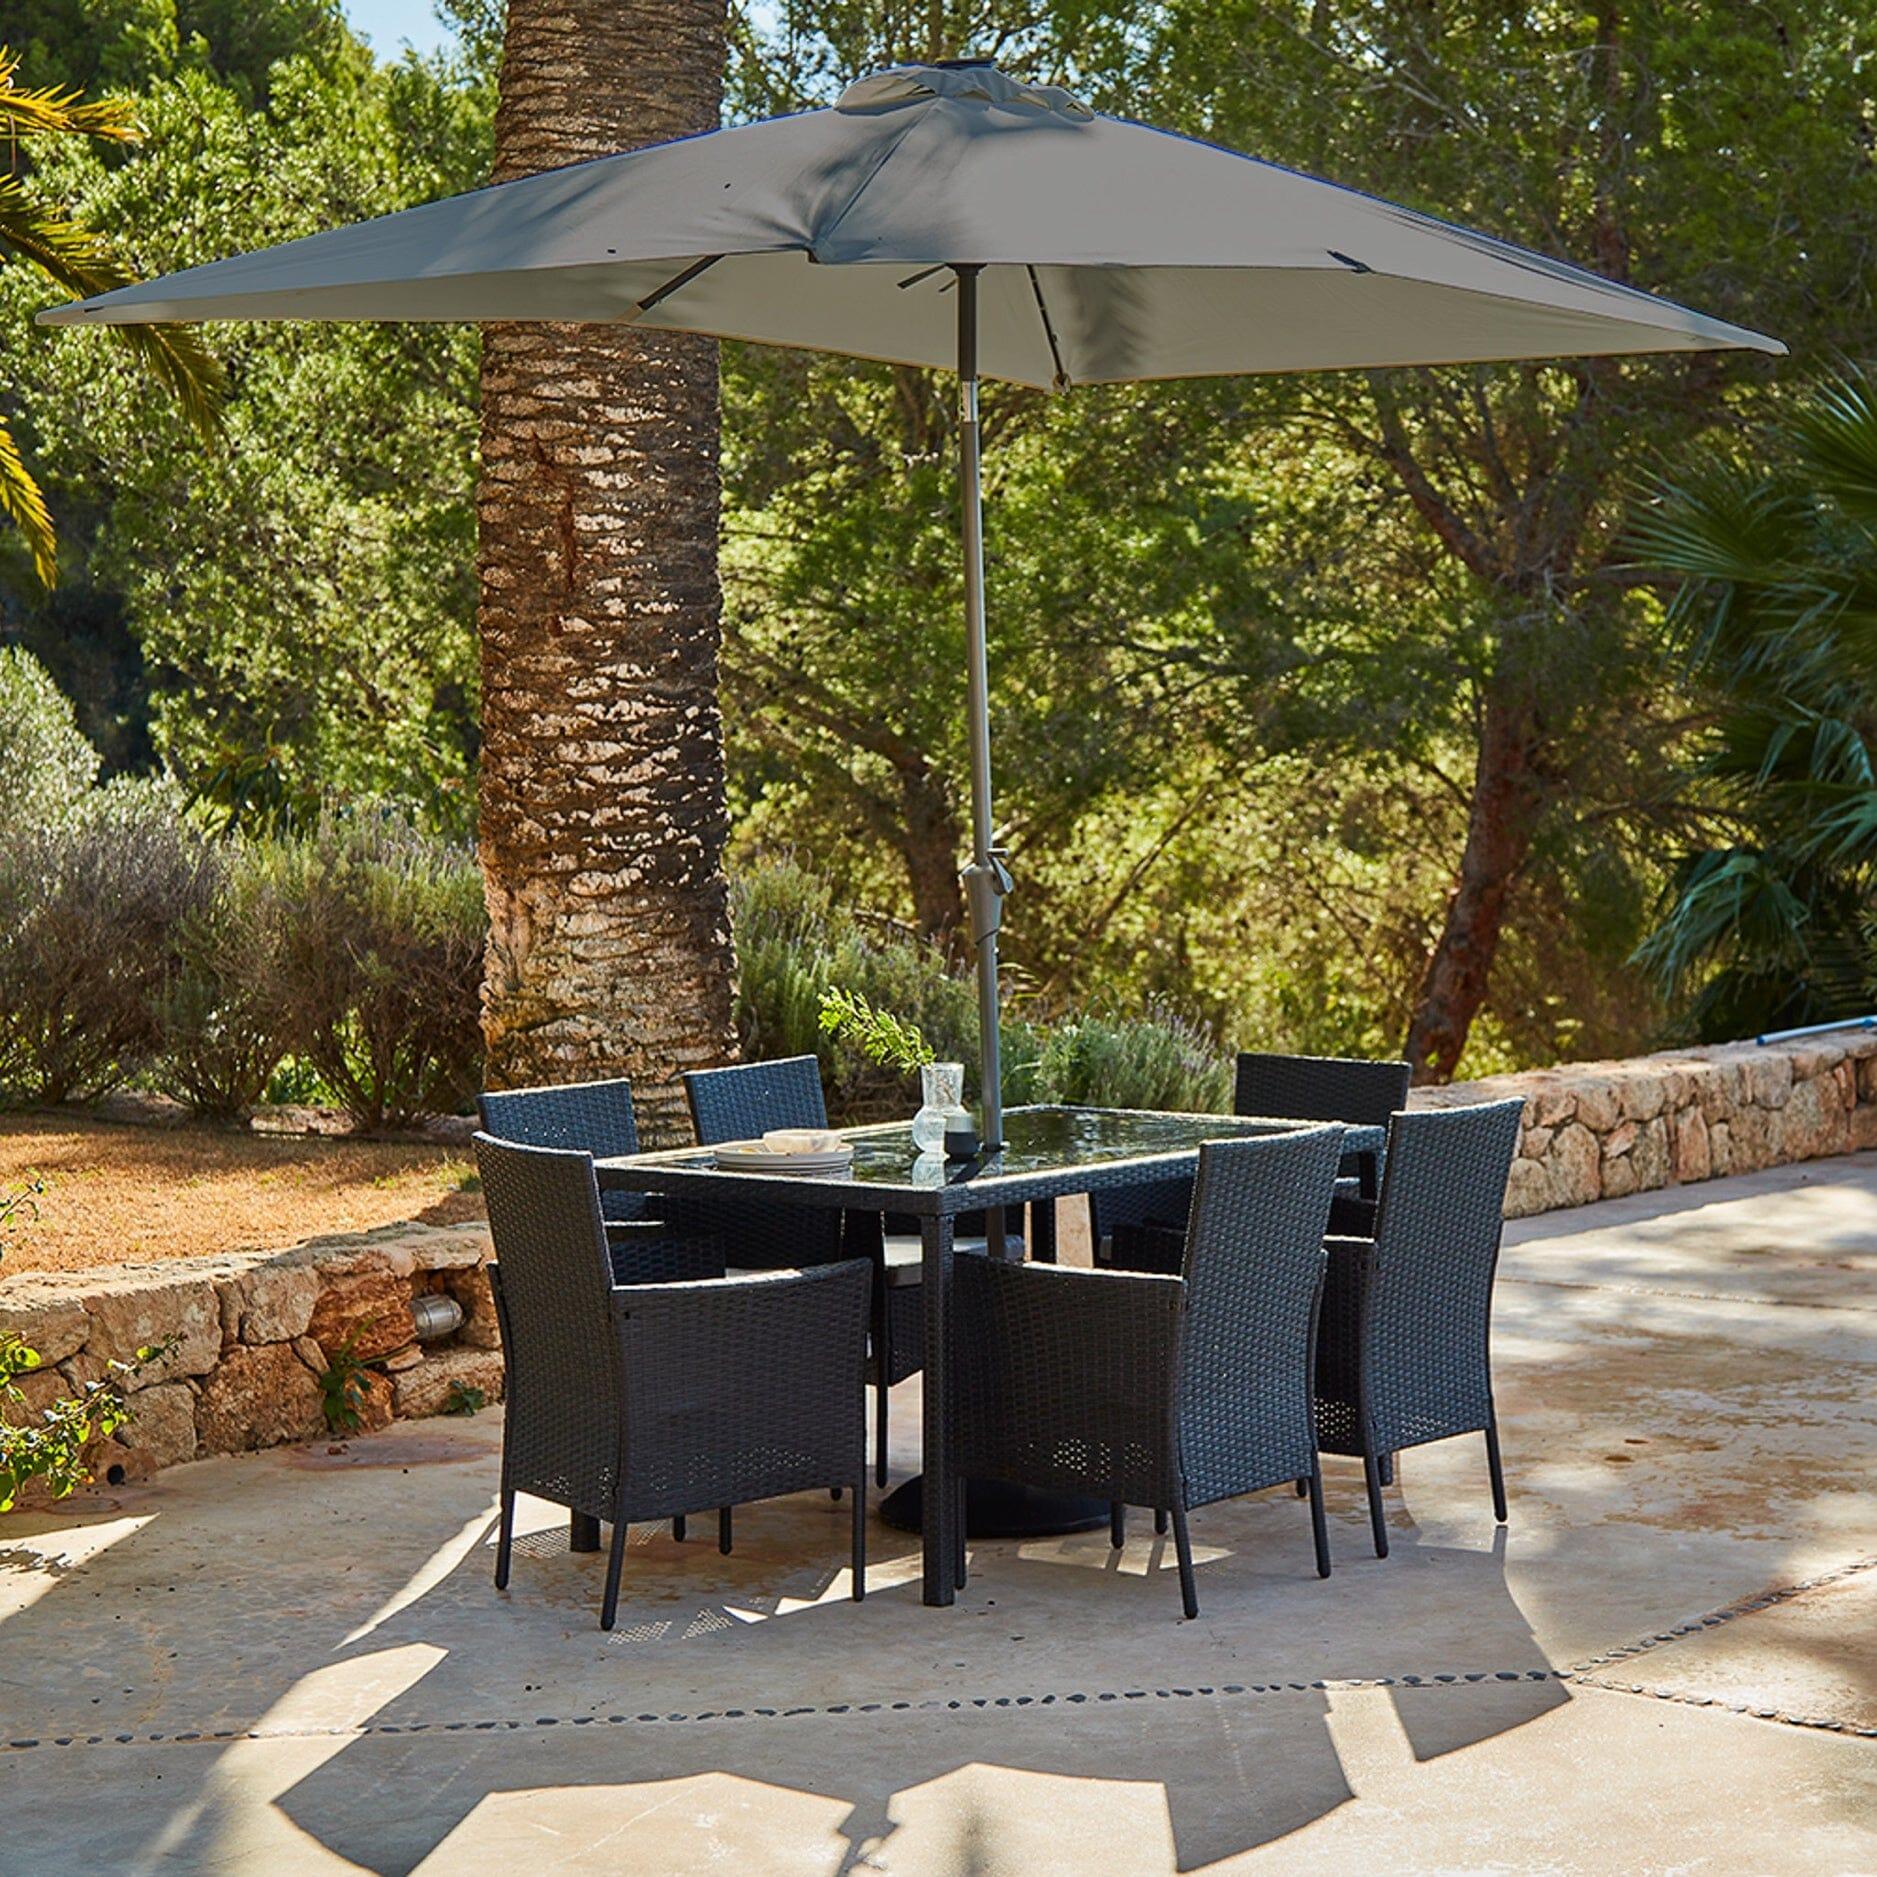 Marston 6 Seater Rattan Dining Set with Grey Parasol - Rattan Garden Furniture - Black